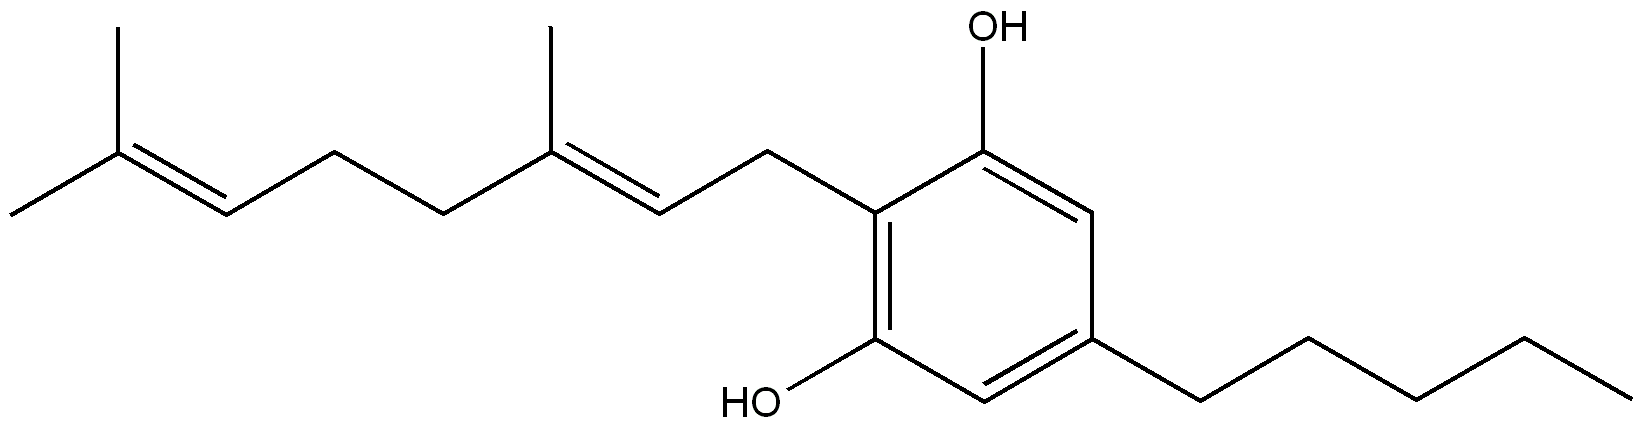 CBG kanabinoid cannabigerol